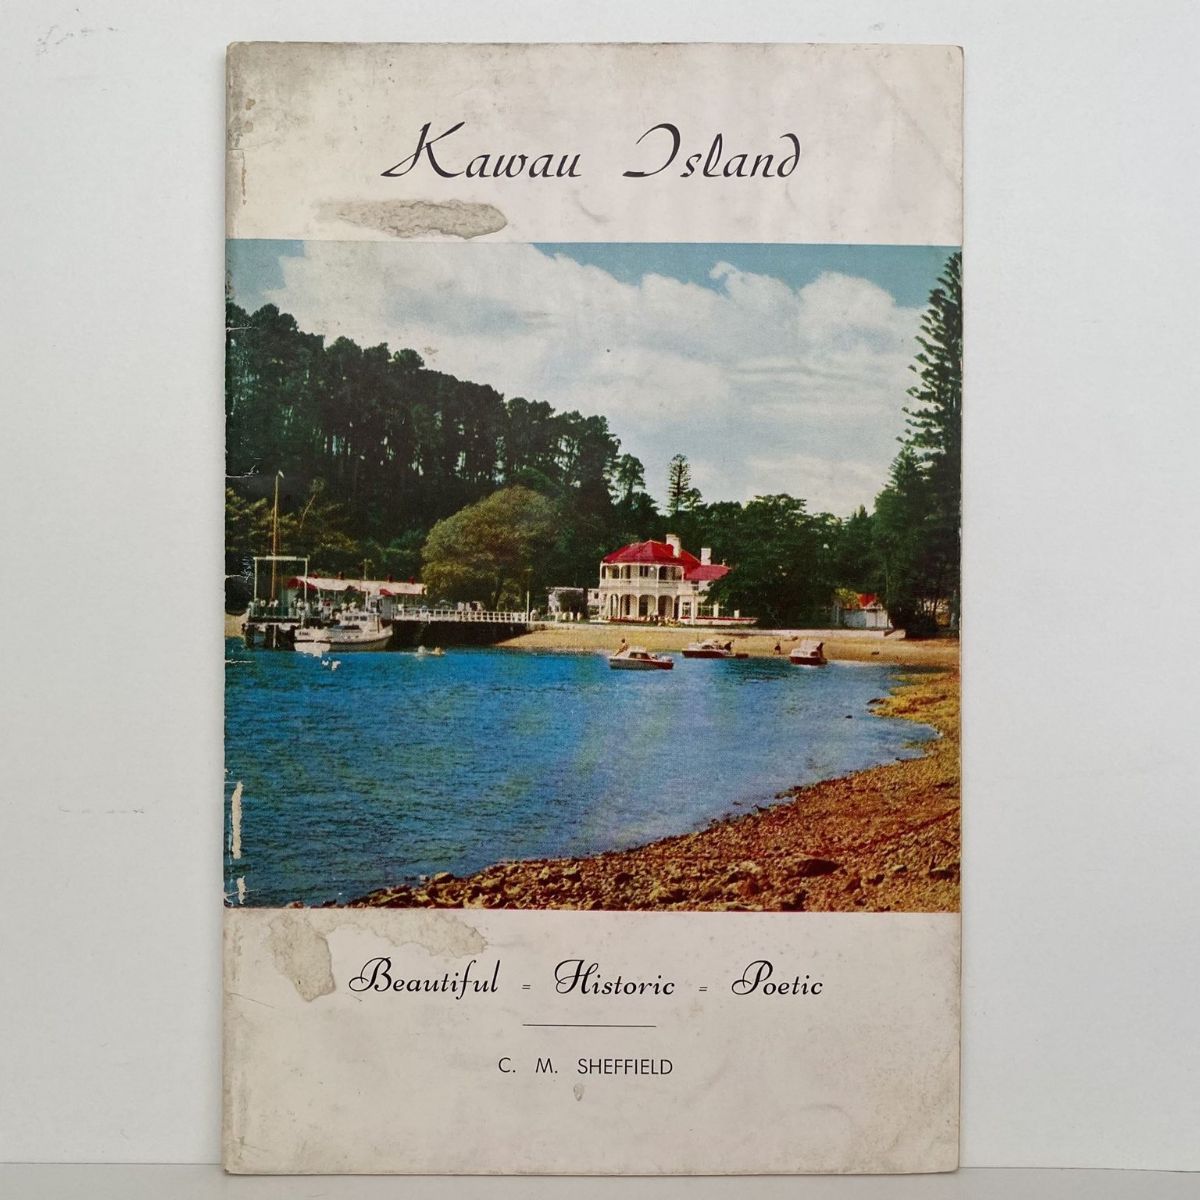 KAWAU ISLAND: Beautiful, Historic, Poetic